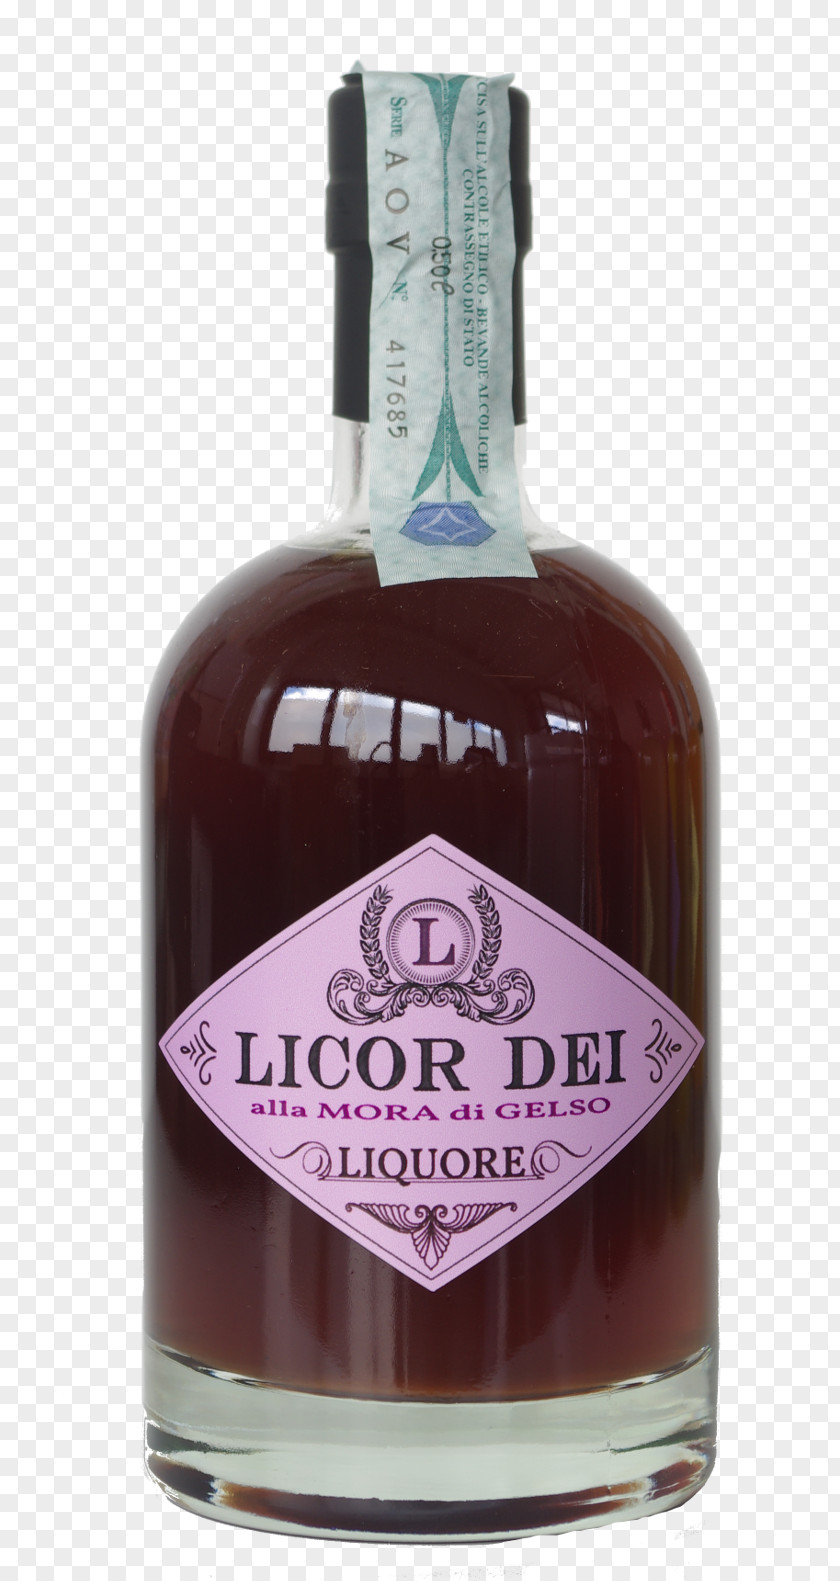 MORA Liqueur Birrificio Artigianale Licor Dei Srl Whiskey Food Glass Bottle PNG